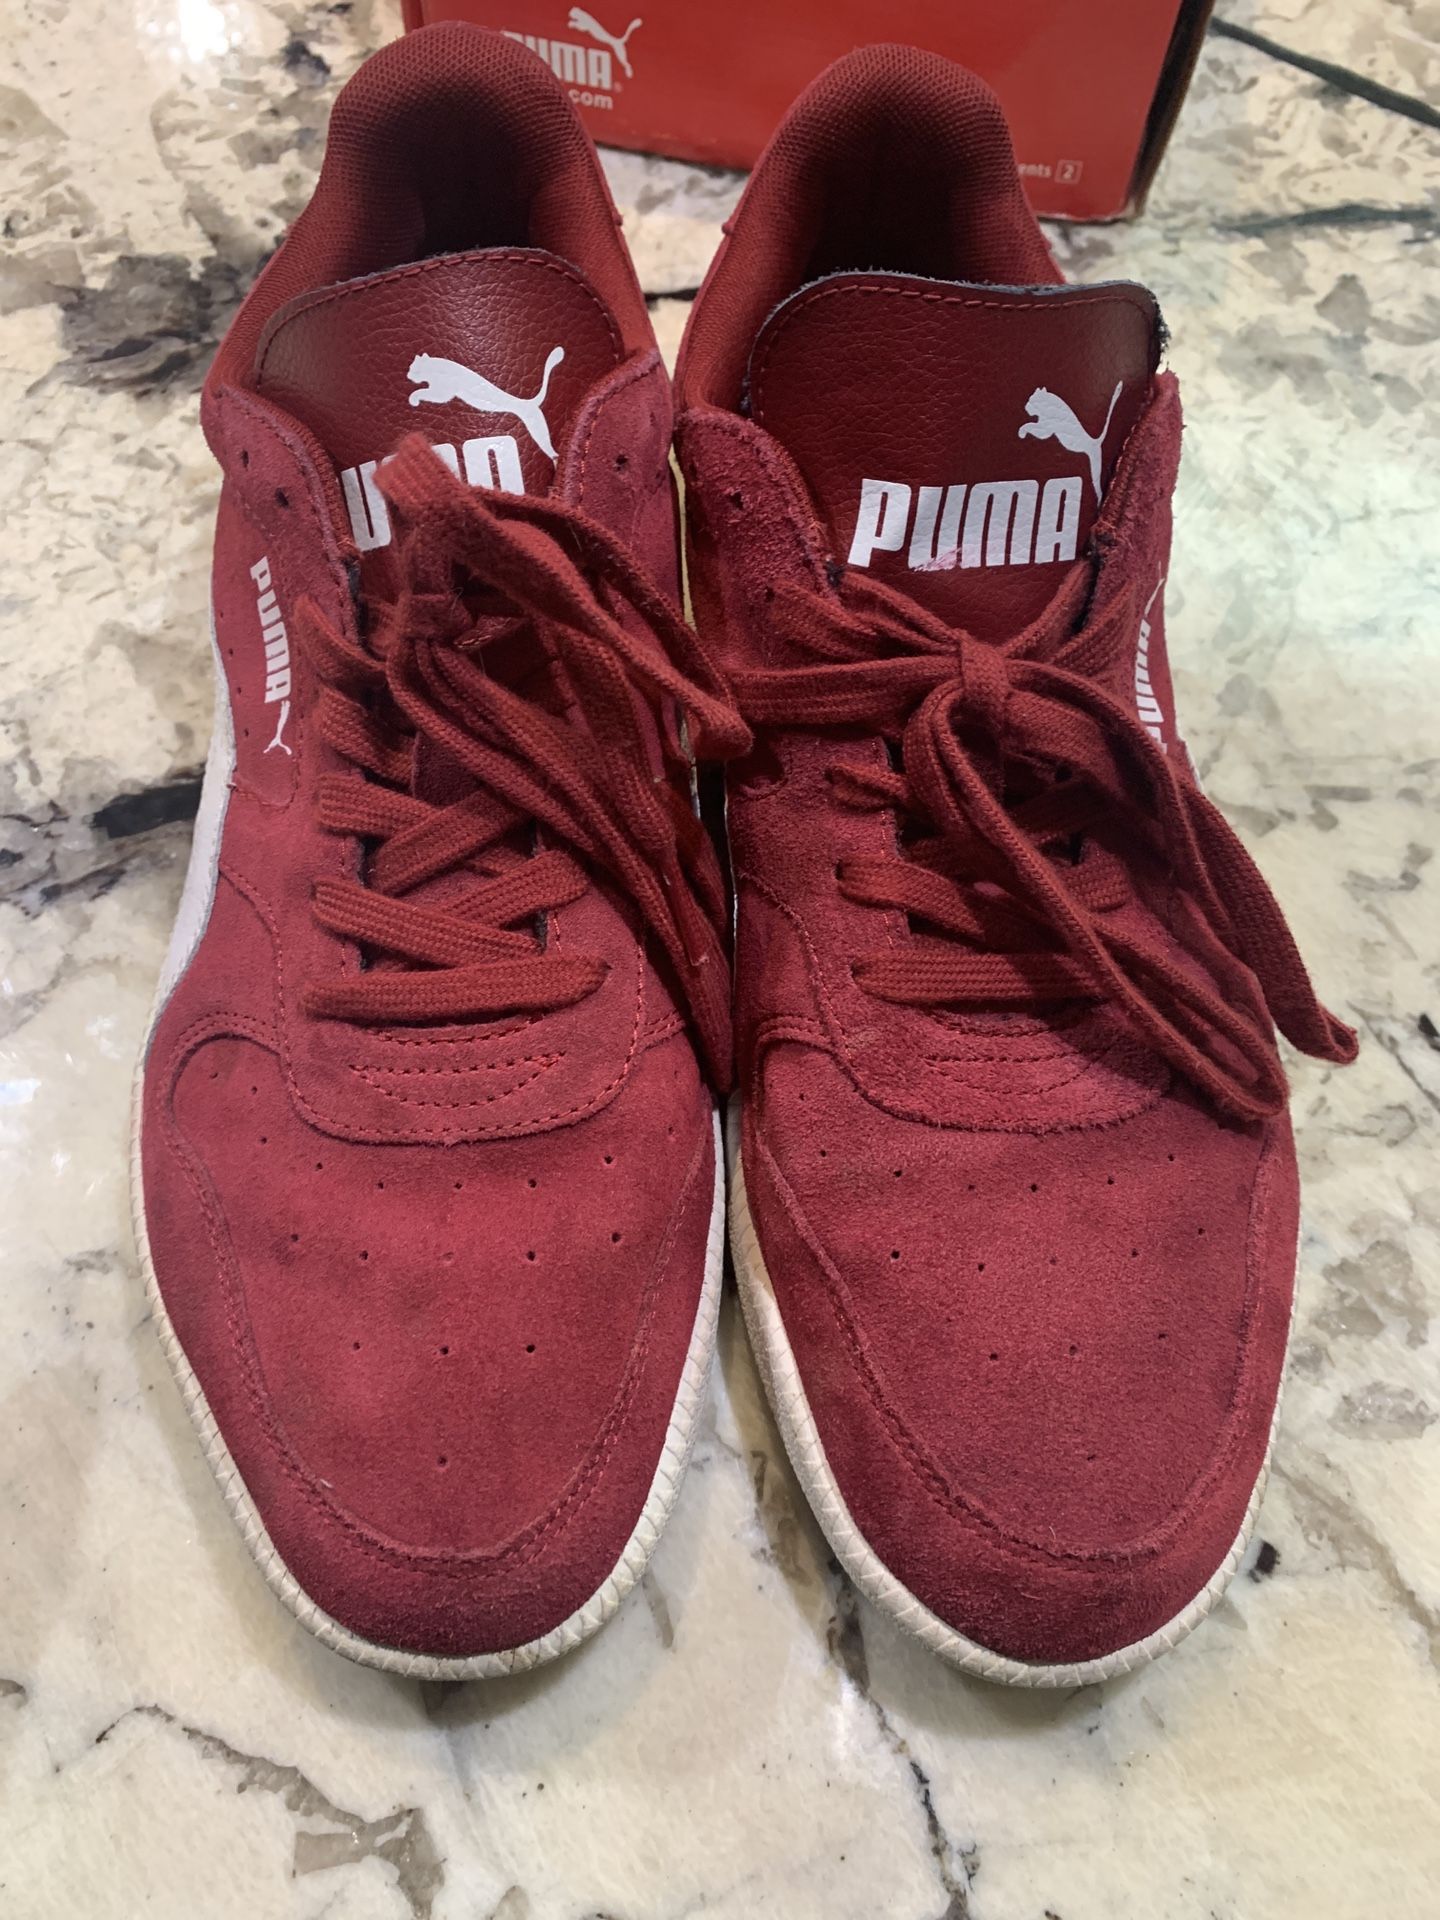 Puma Icra Trainer Suede Classic Men's 12 Red & White New With Box Retro